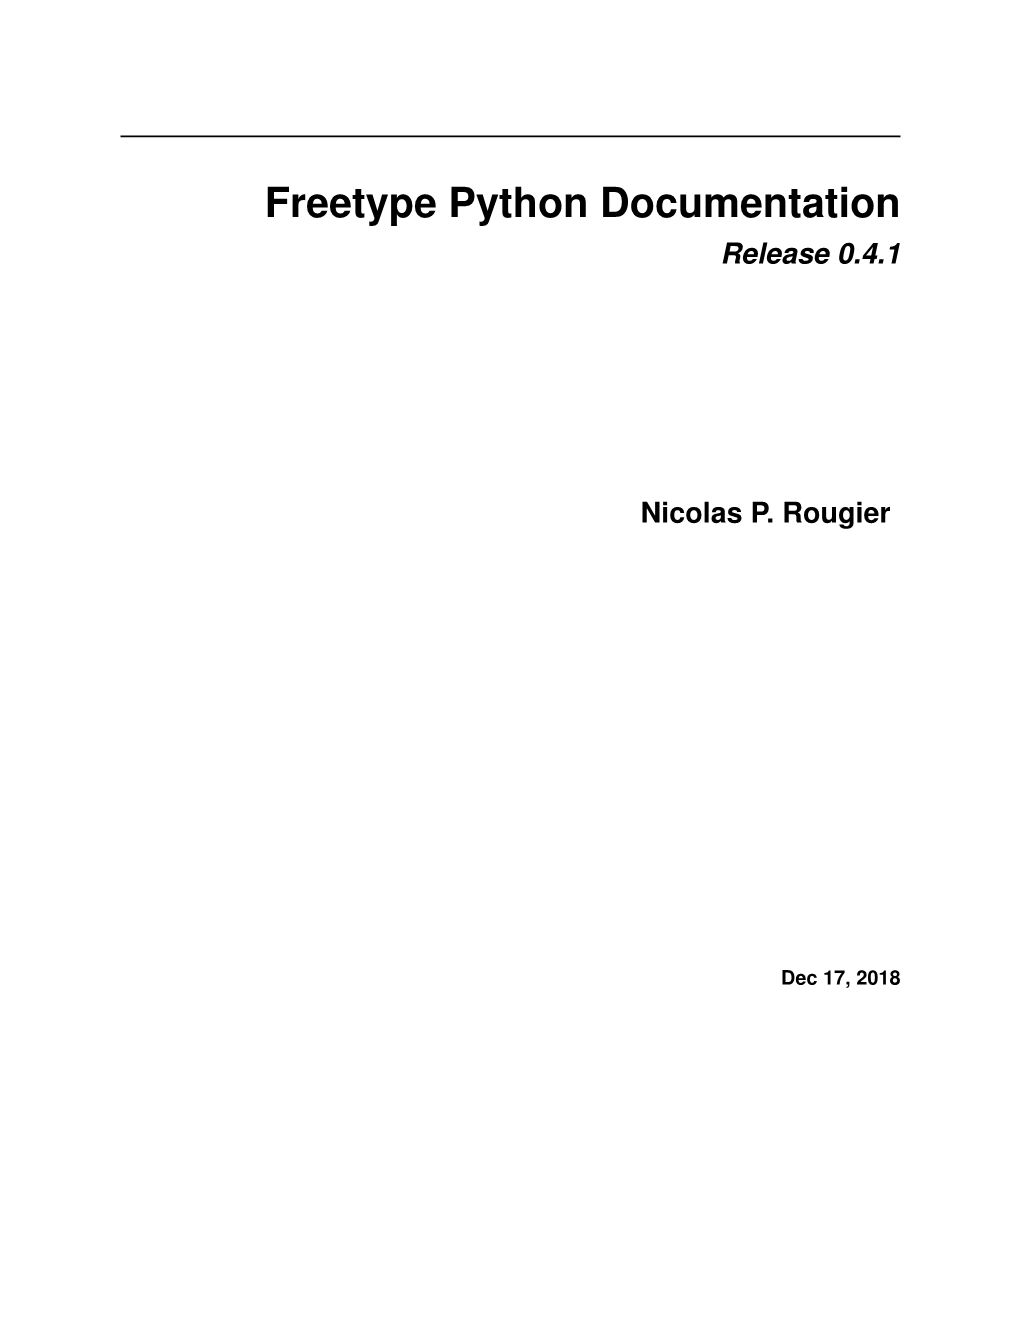 Freetype Python Documentation Release 0.4.1